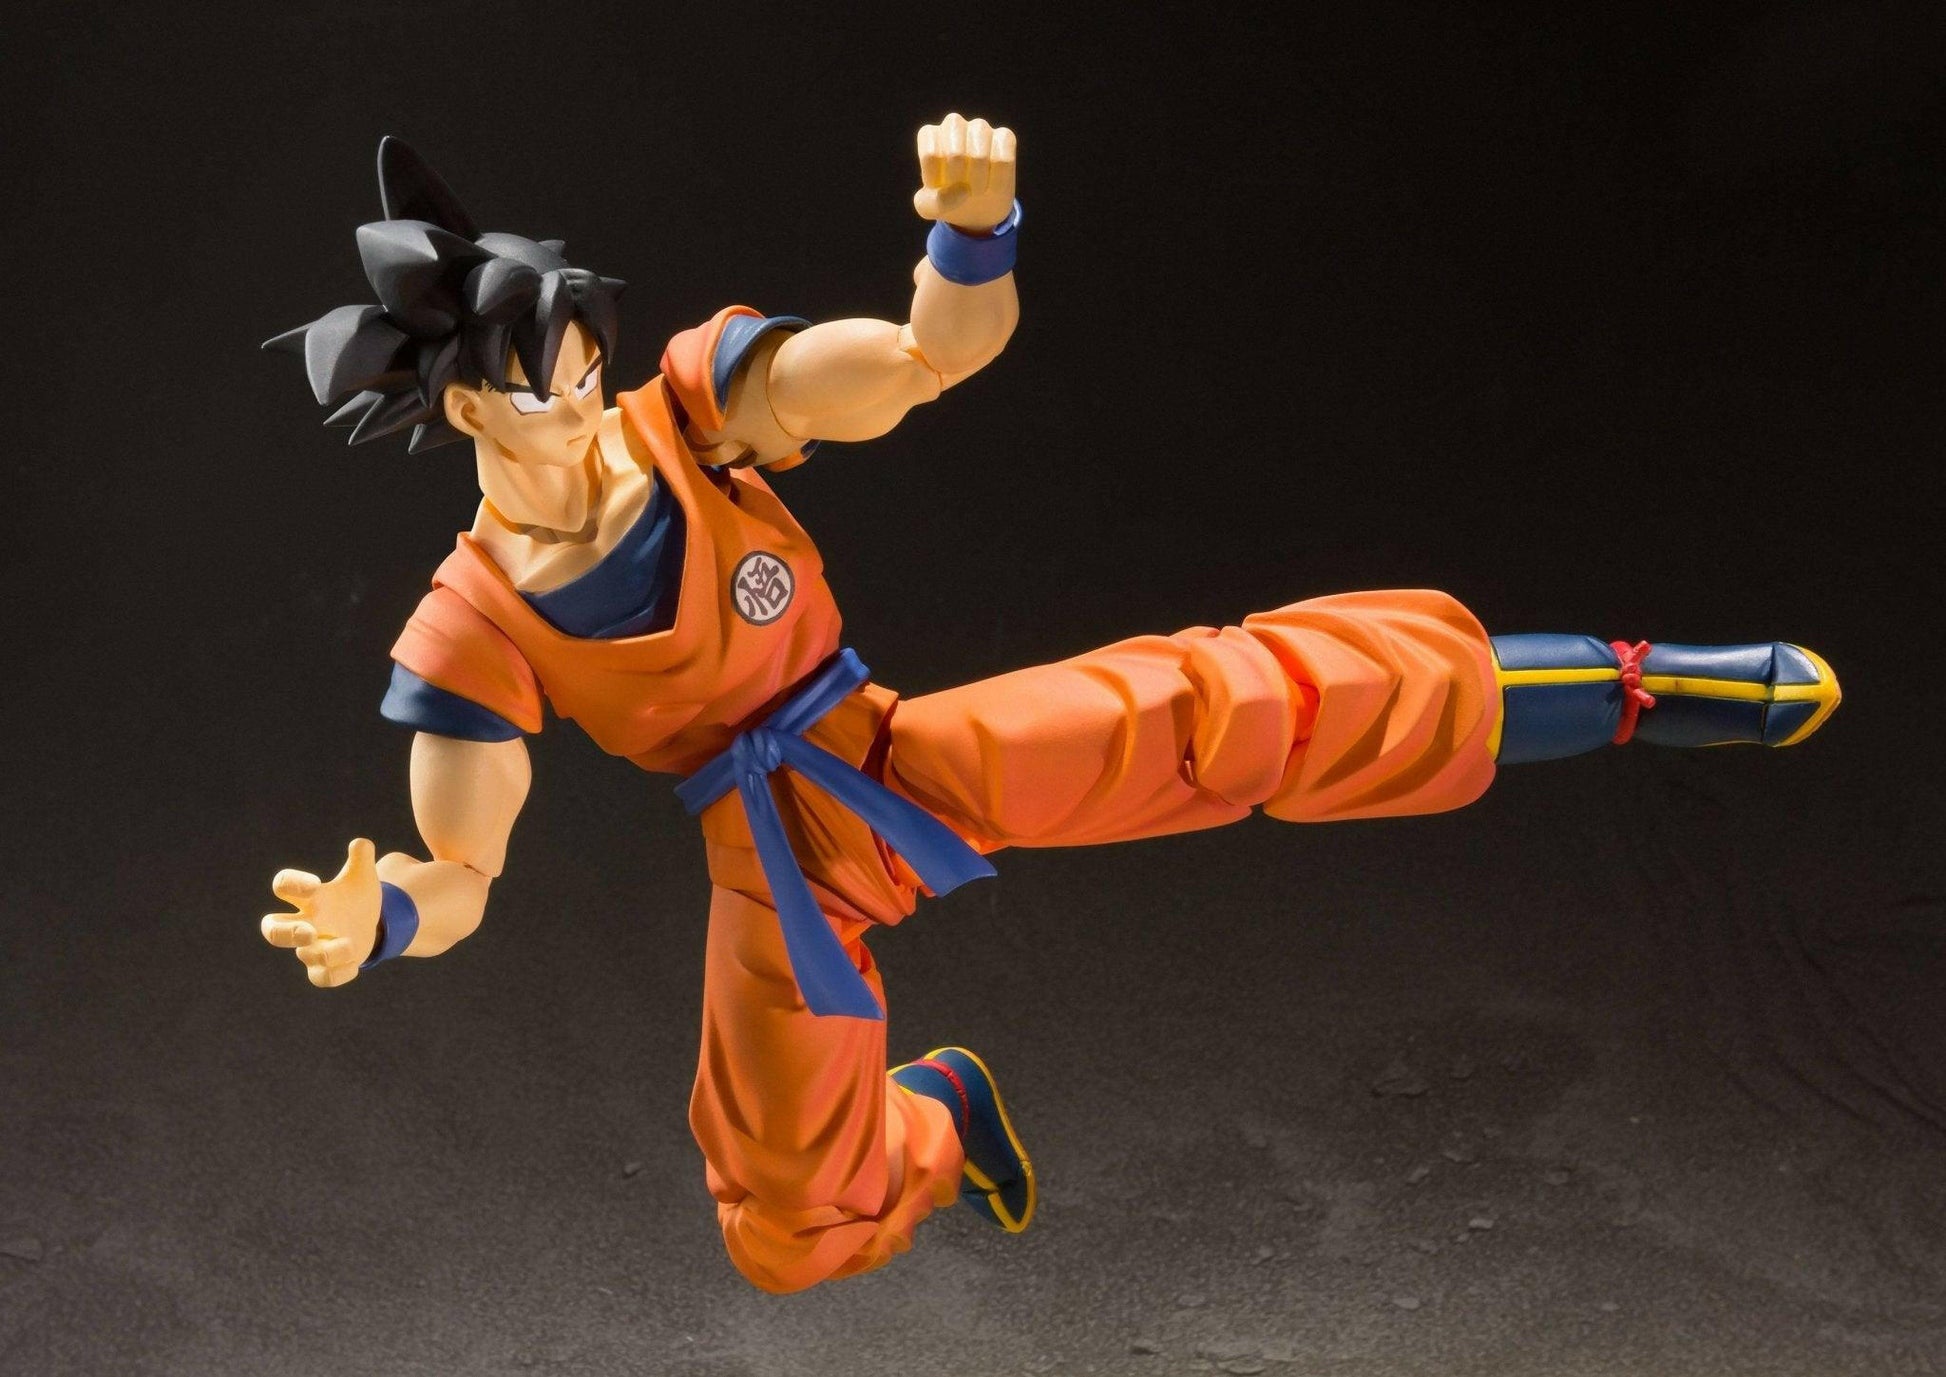 Pre-Order! S.H. Figuarts Dragon Ball Z Actionfigur Son Goku (A Saiyan Raised On Earth) 14cm - Toy-Storage